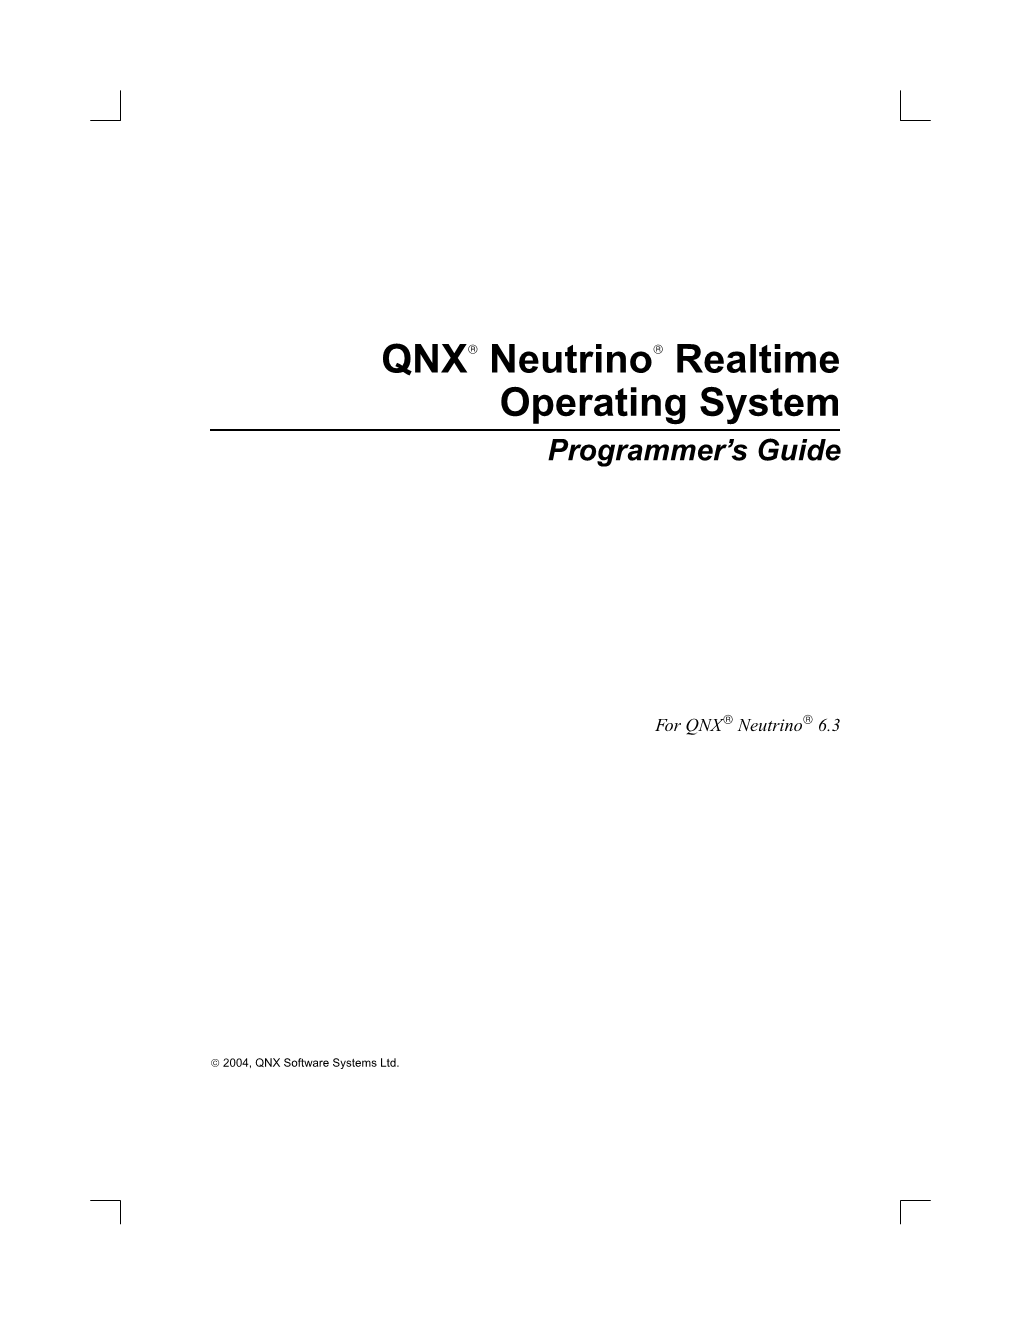 QNX® Neutrino® Realtime Operating System